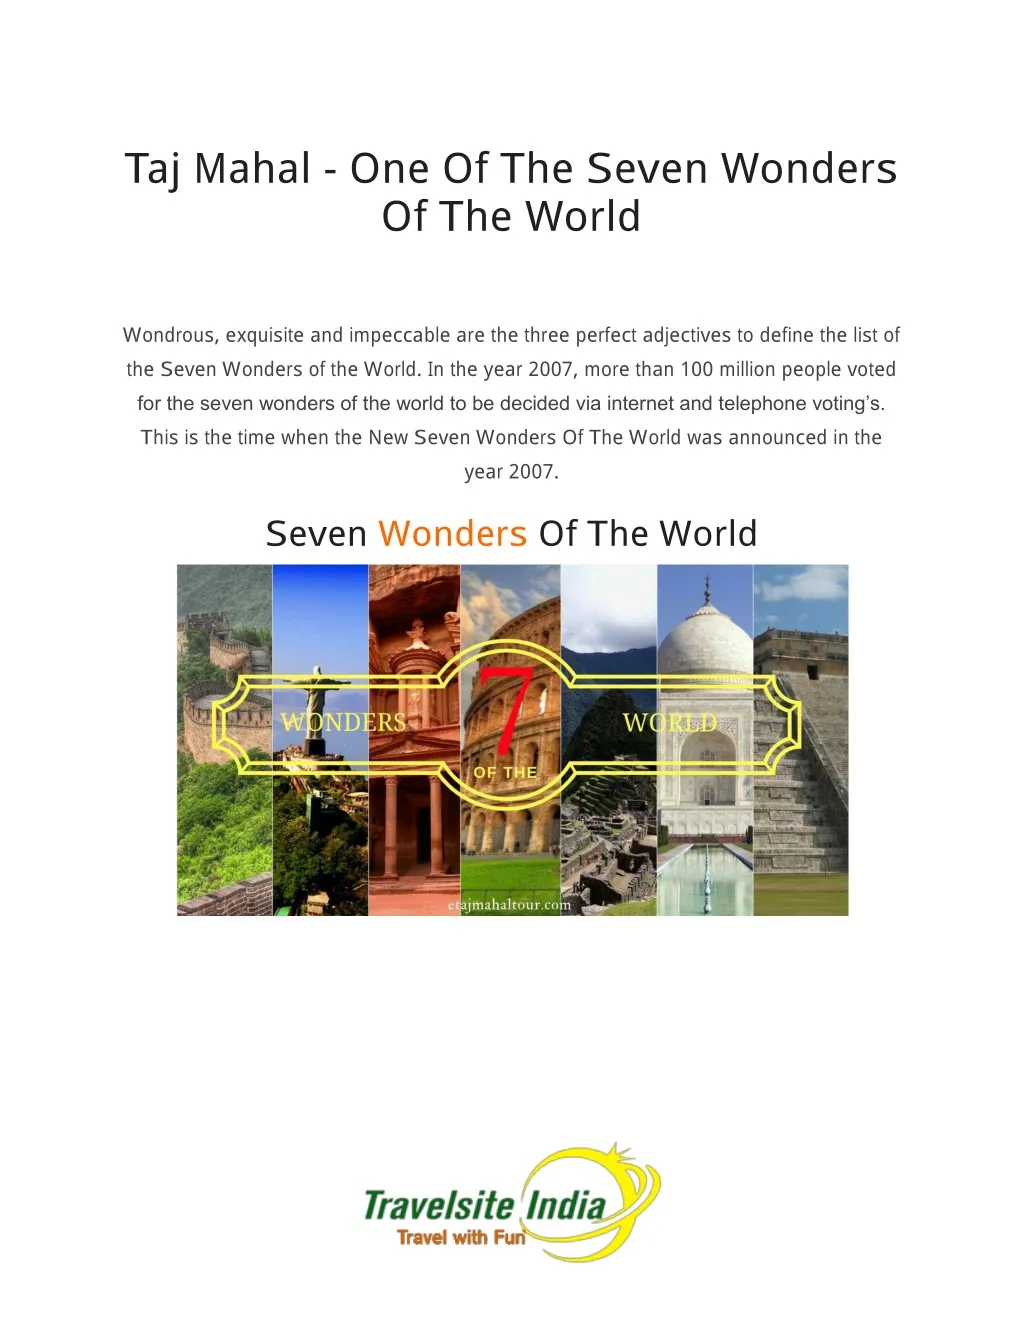 taj mahal one of the seven wonders of the world